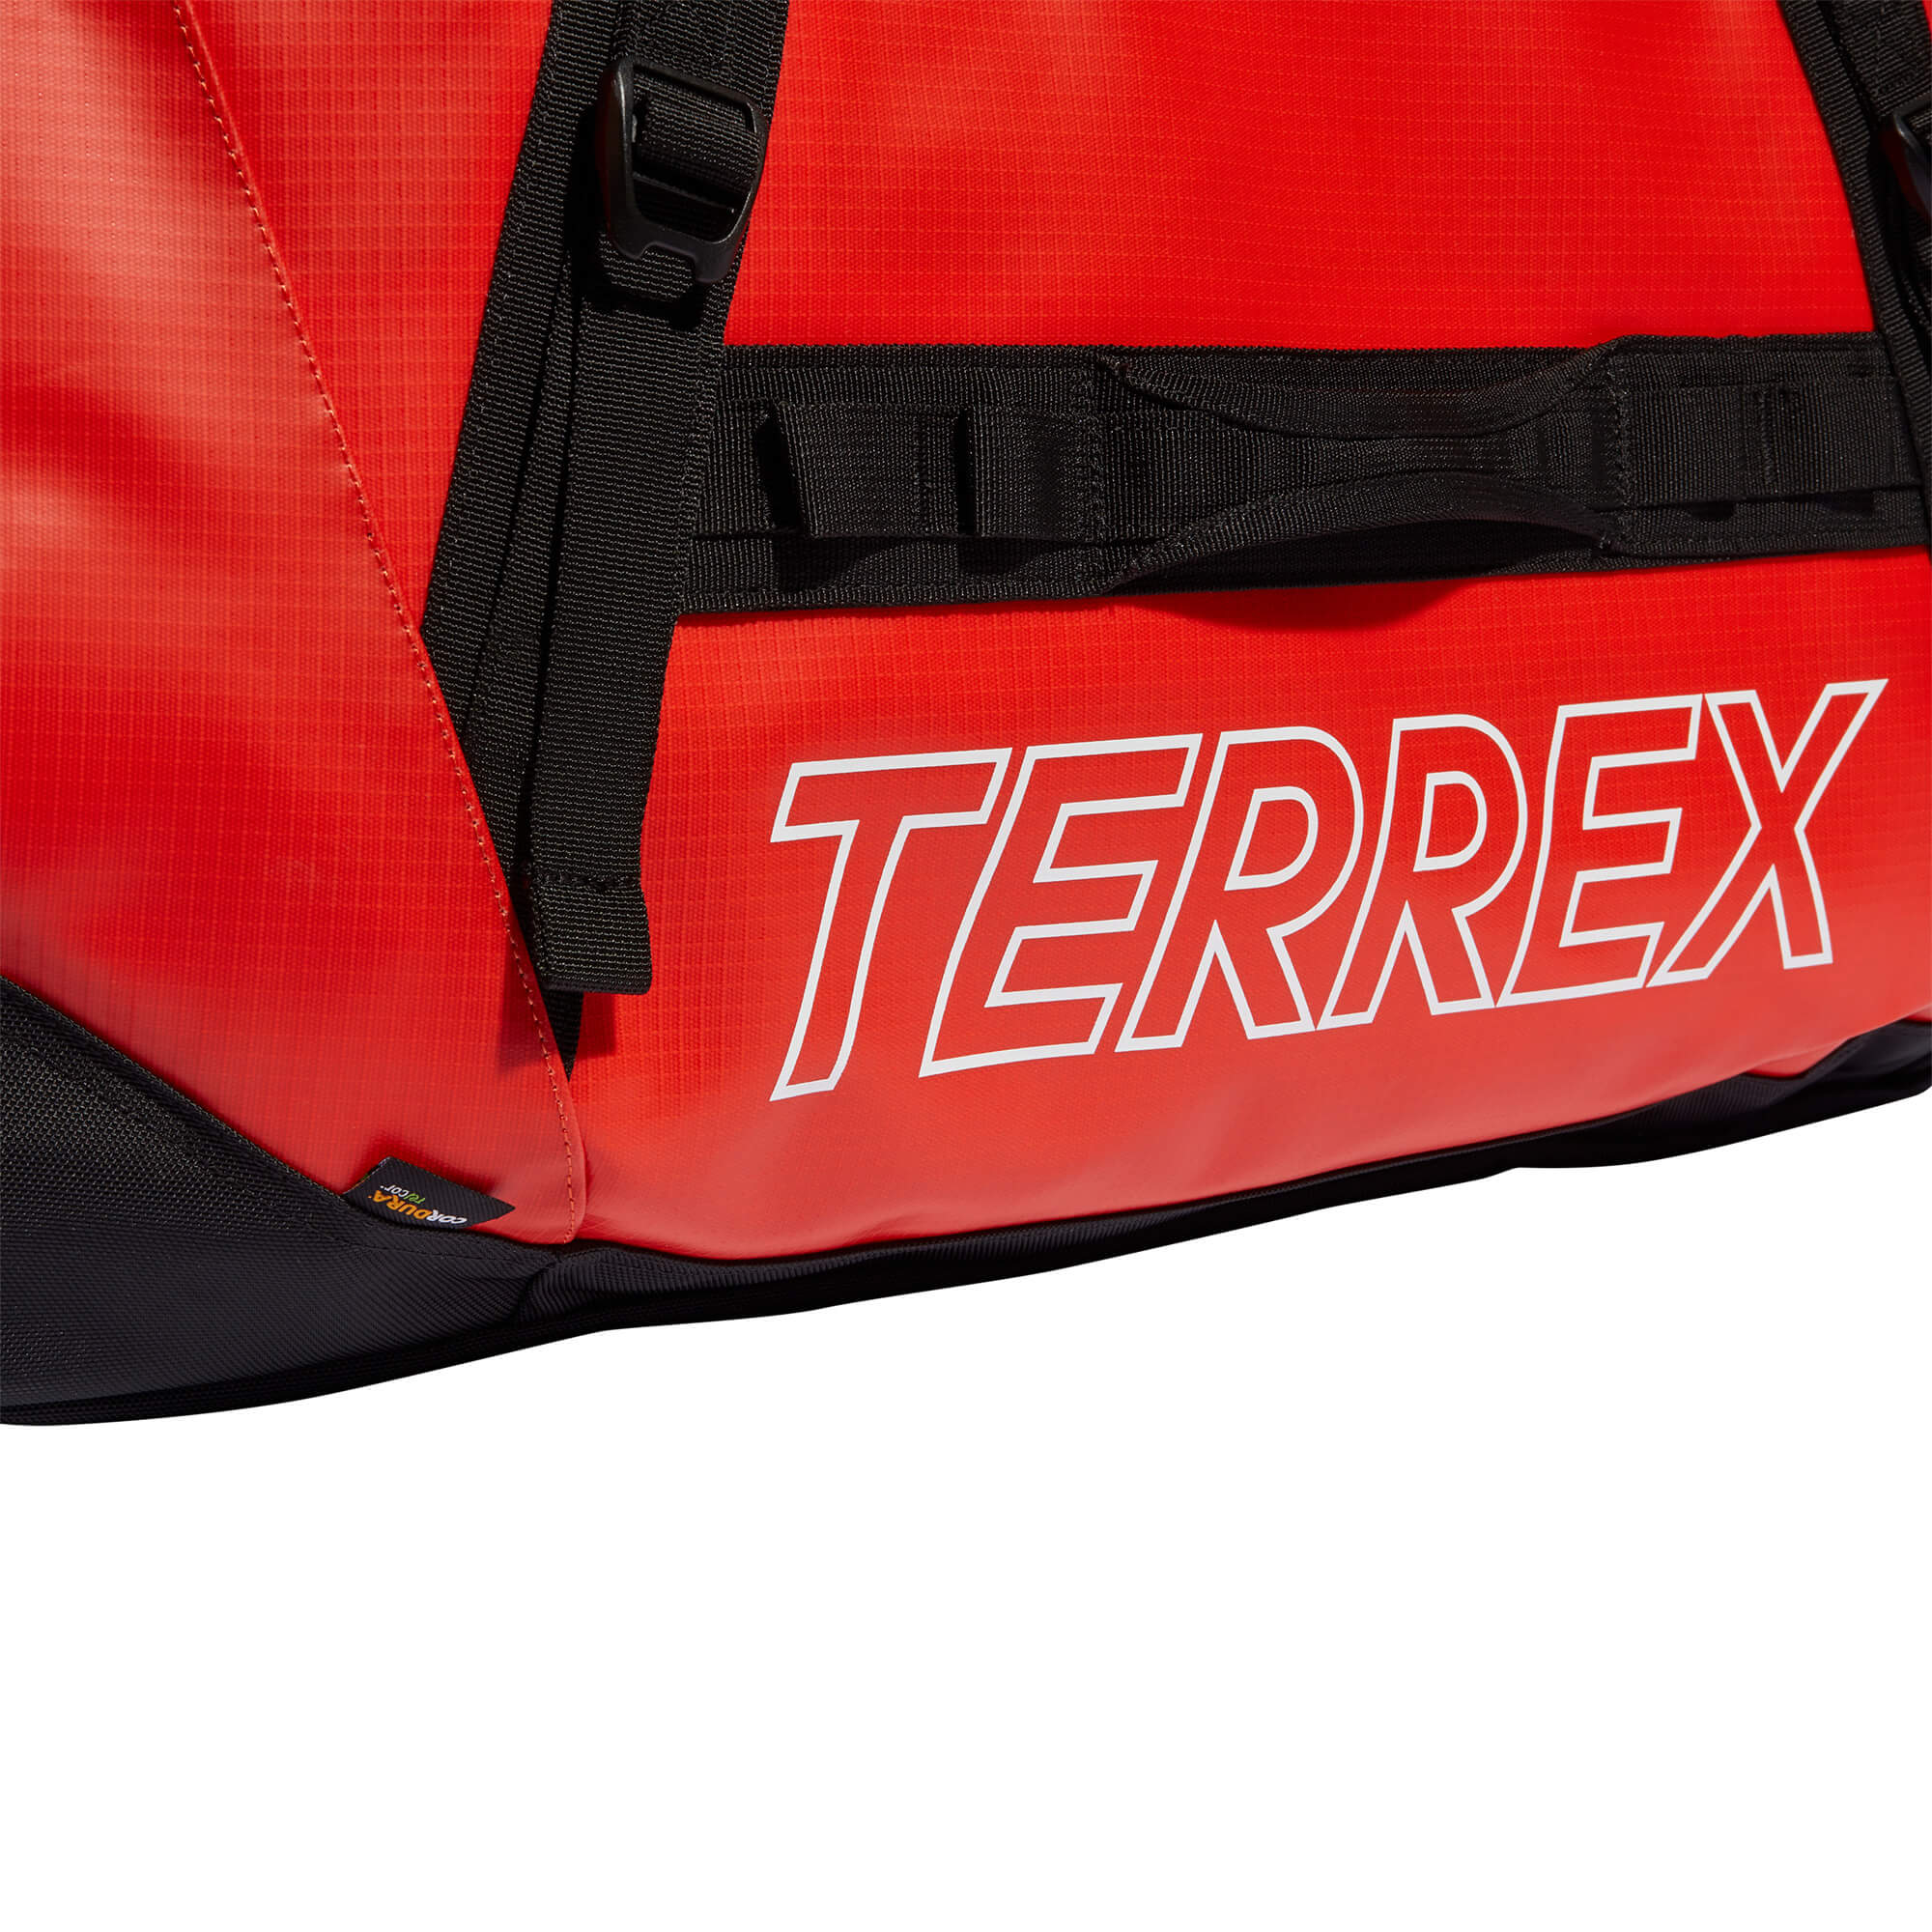 Adidas Terrex Rain.Rdy Expedition L 100L Duffel Travel Bag